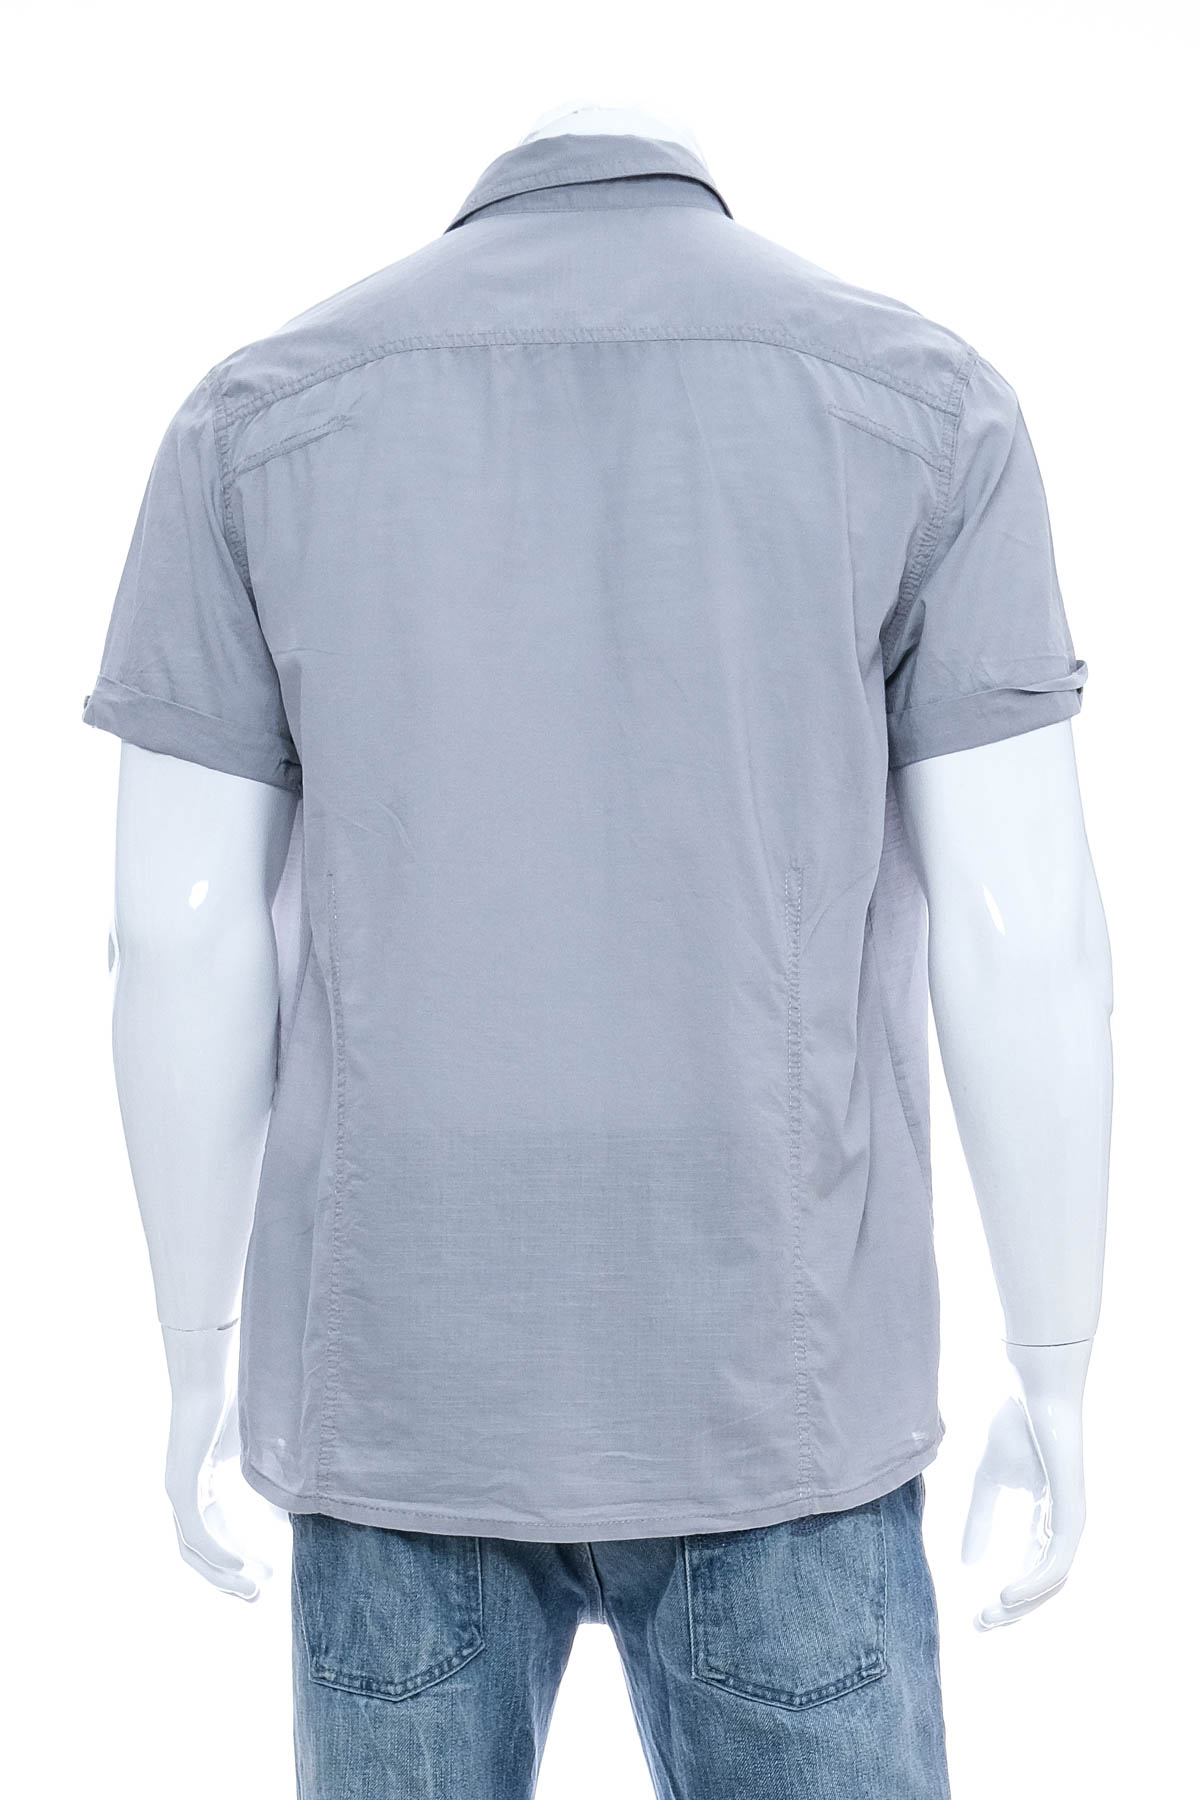 Men's shirt - DIVIDED - 1